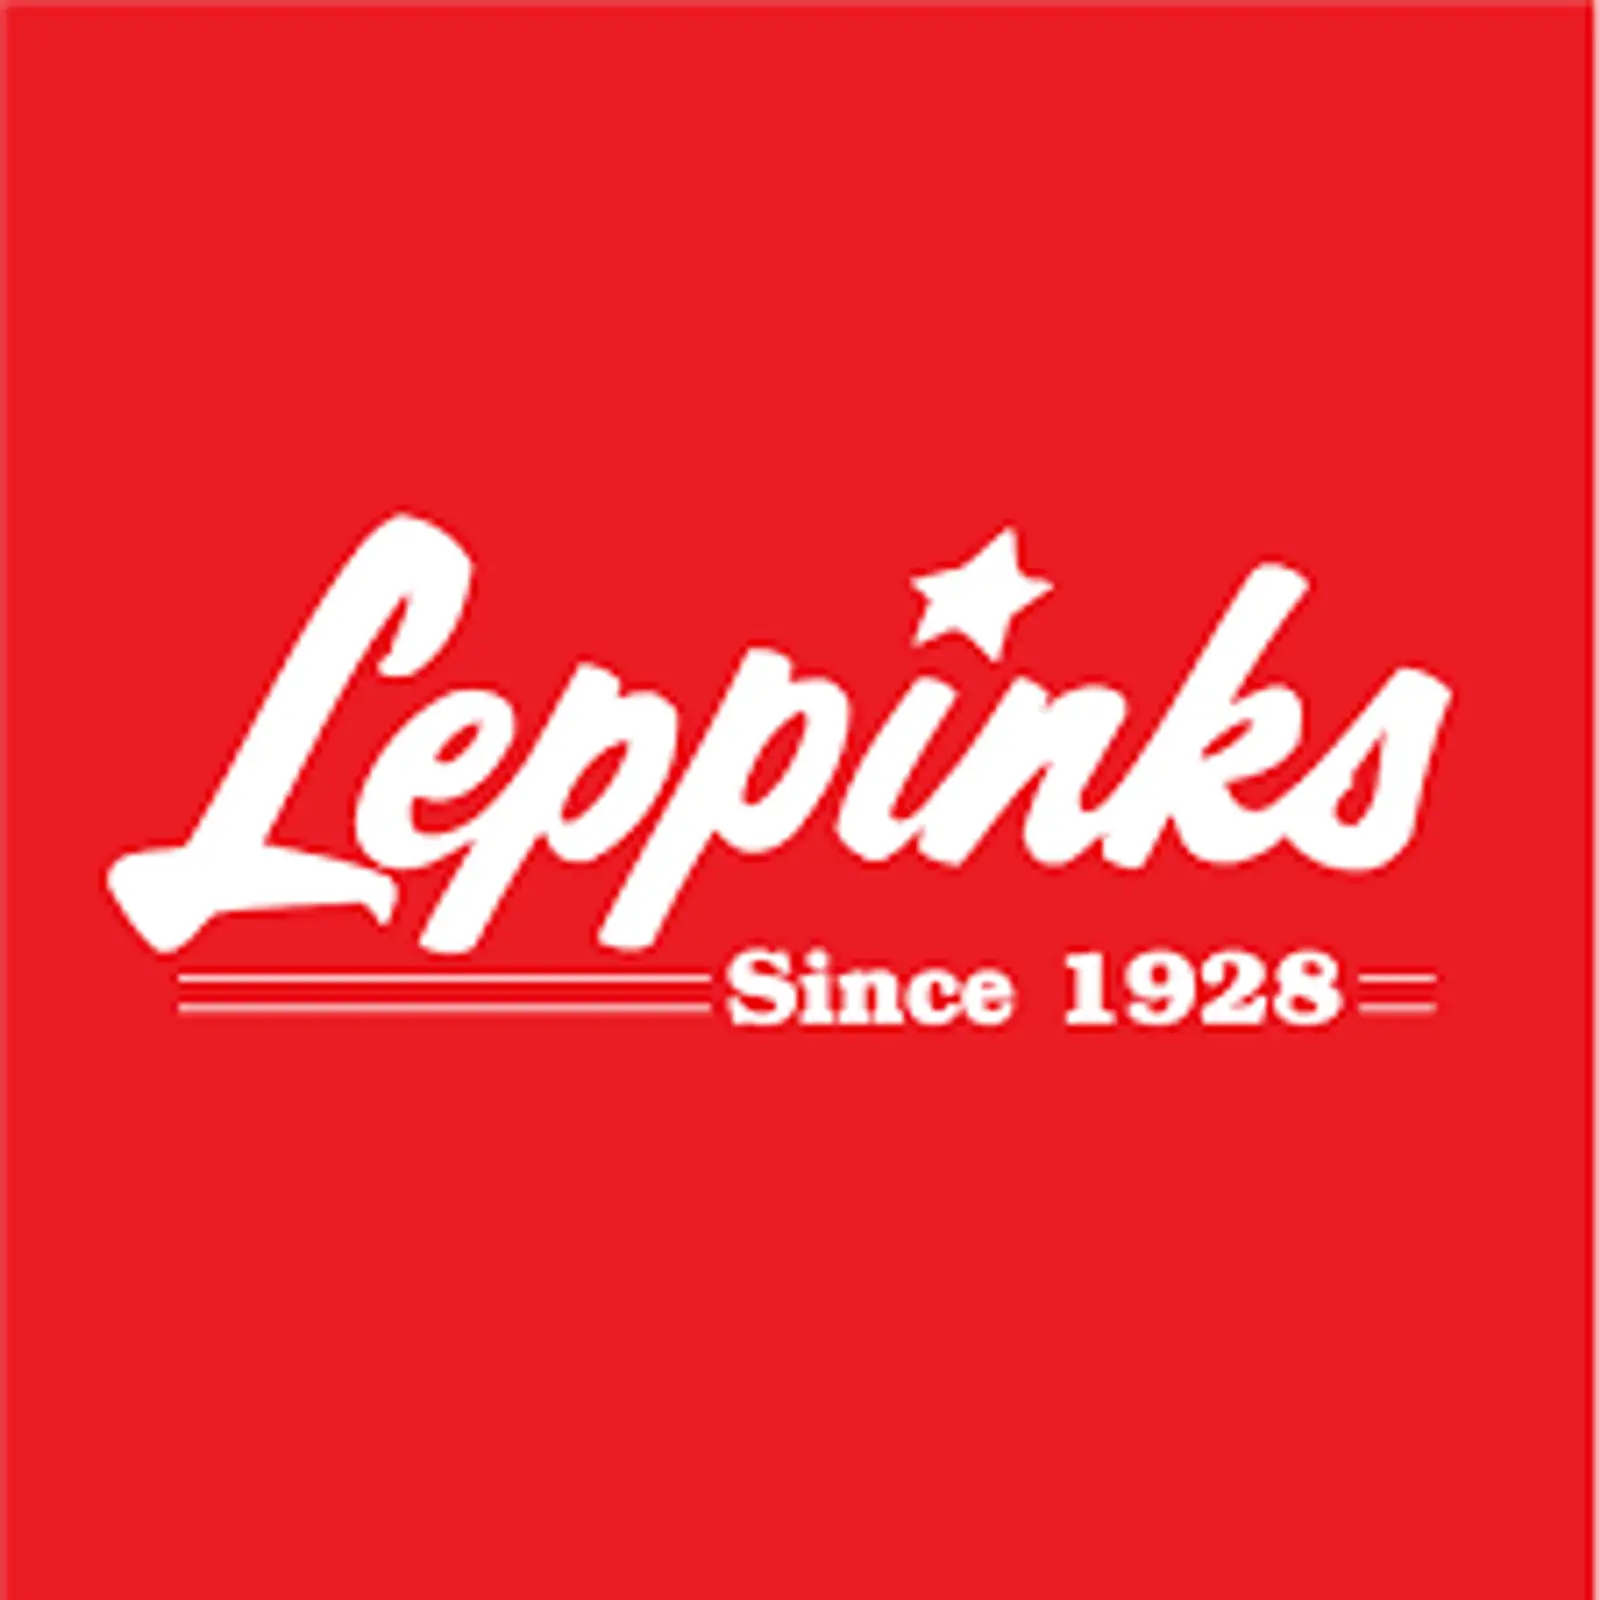 Leppinks logo